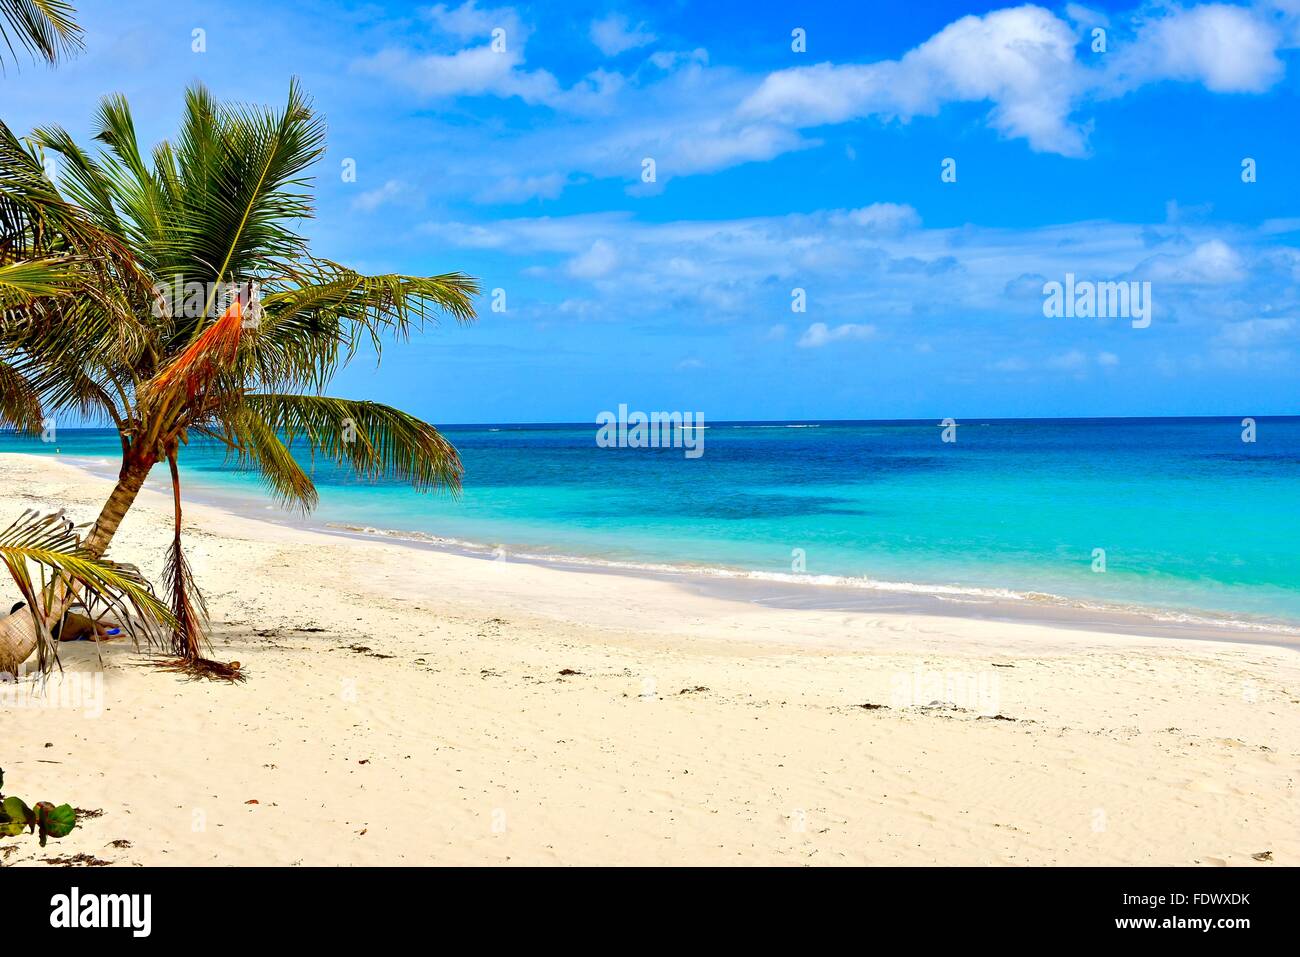 Flamenco beach on Culebra island, Puerto Rico Stock Photo